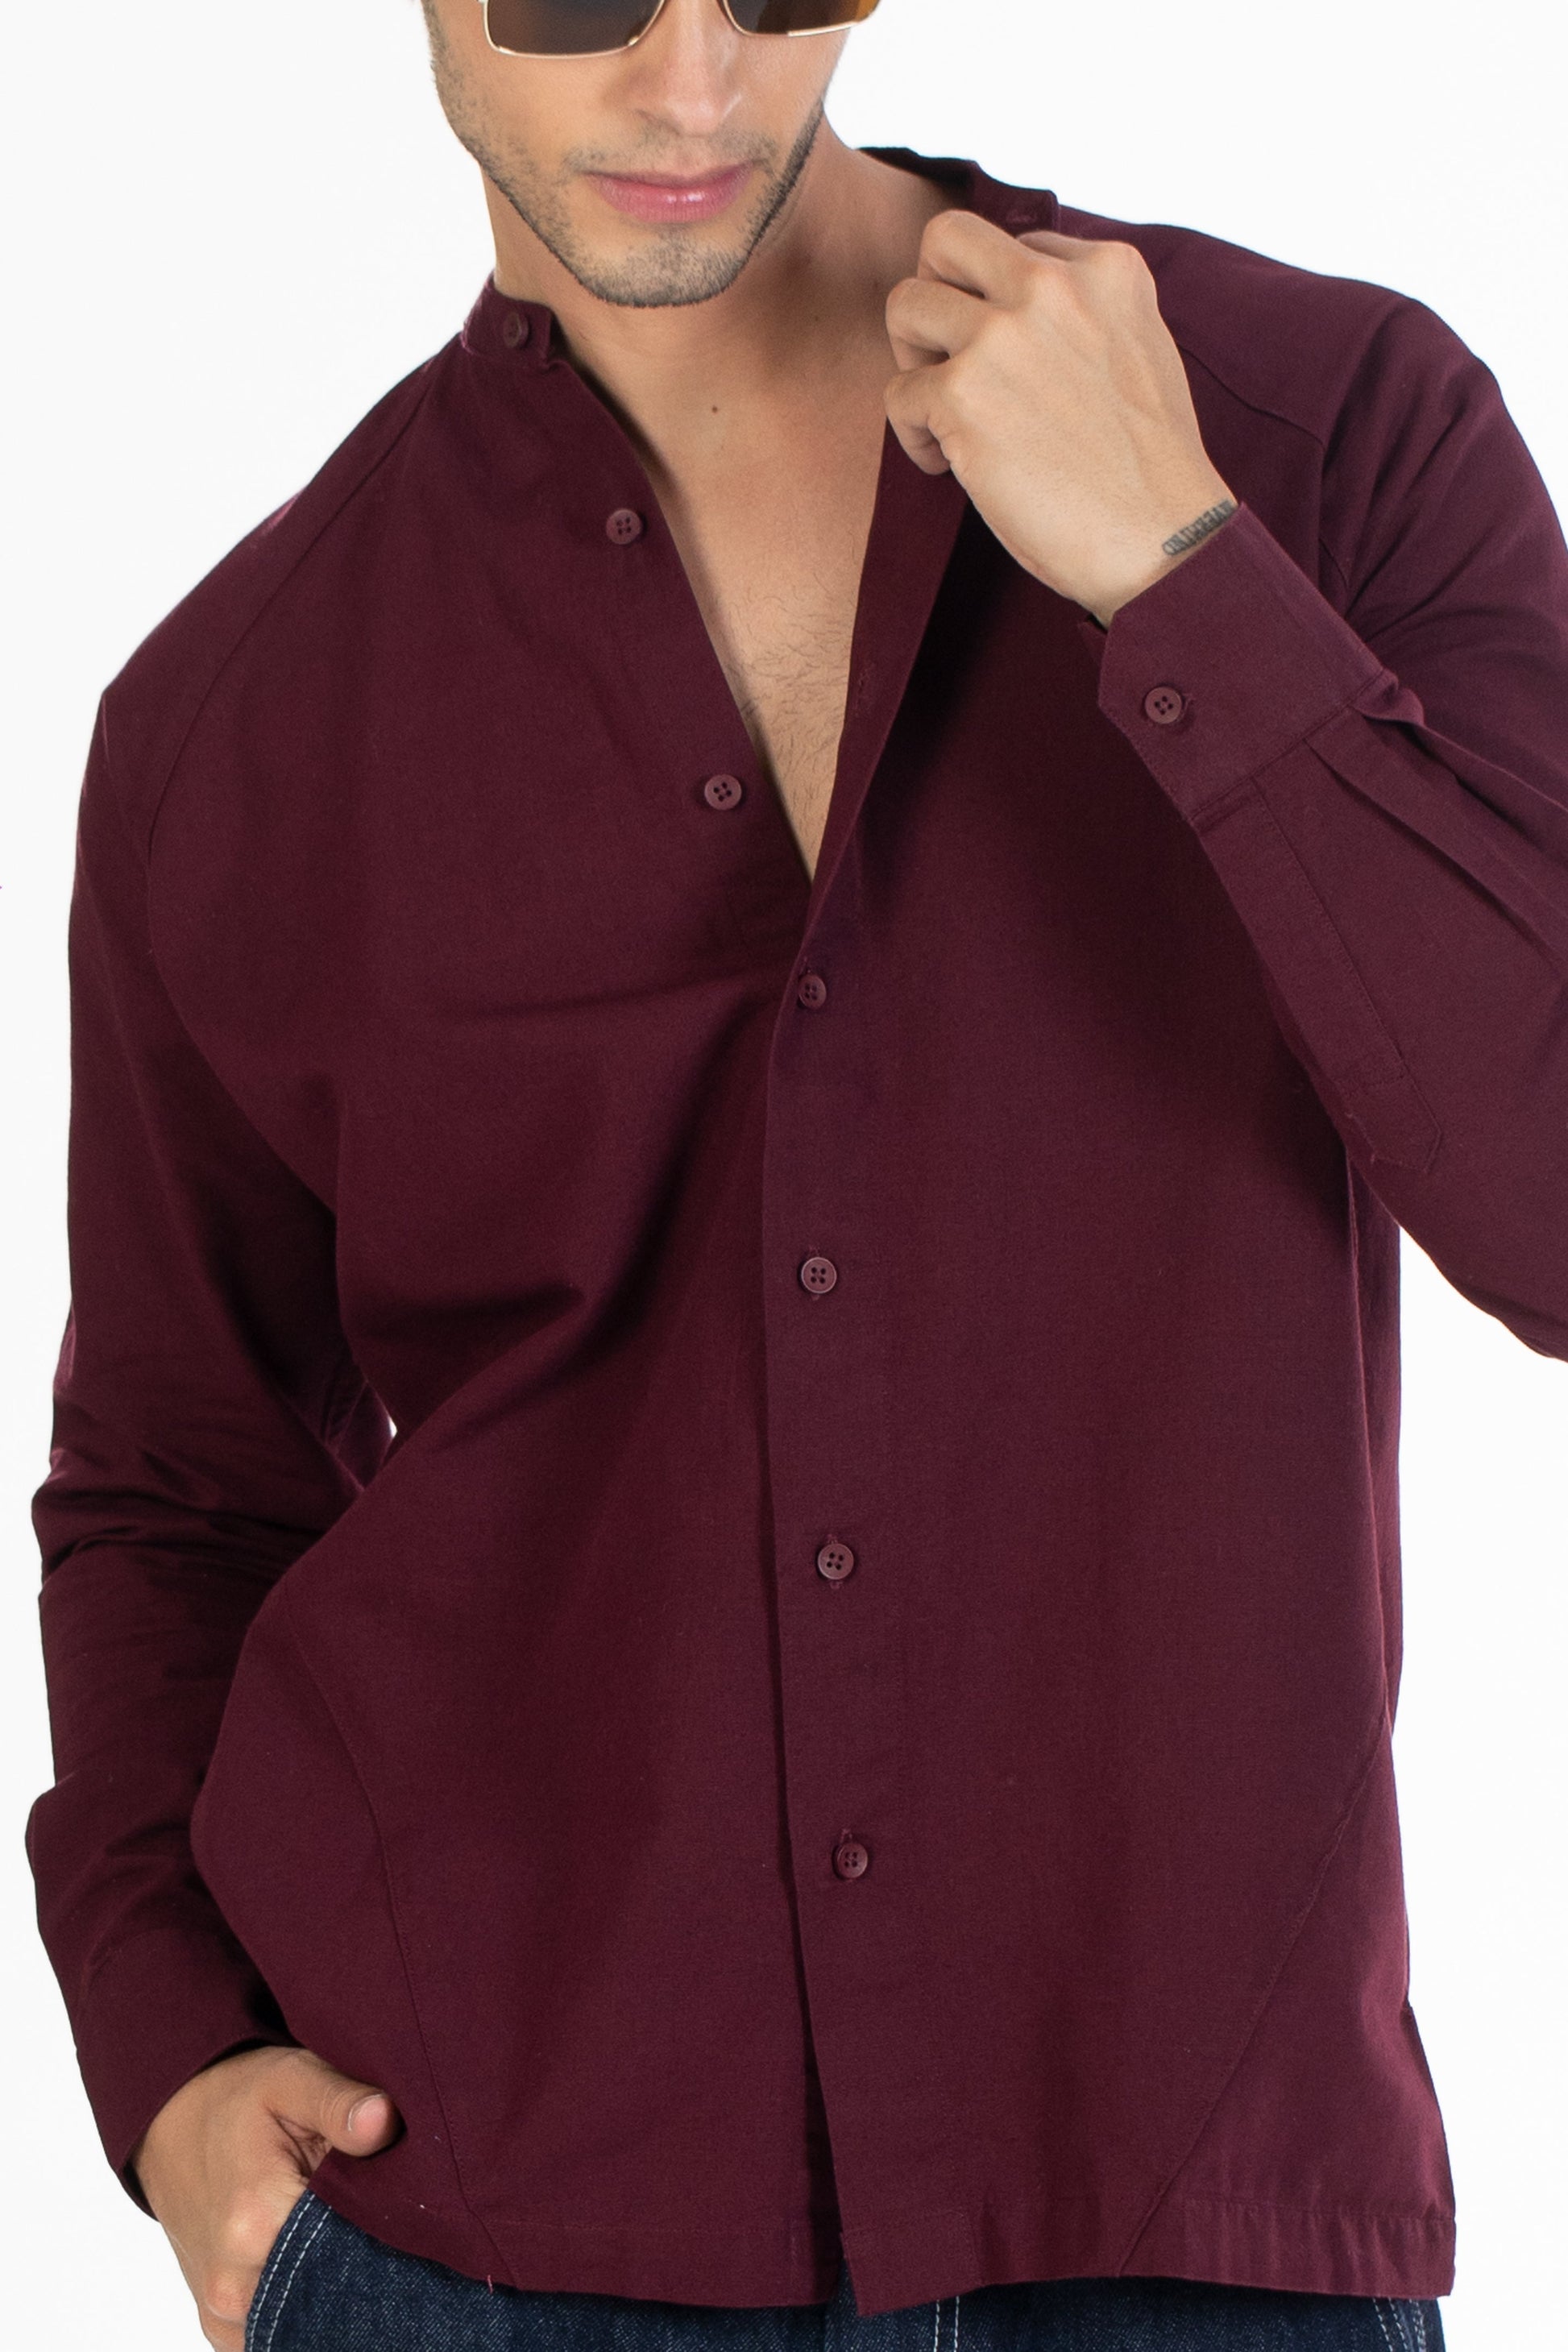 Buy Chinese Collar Giza Jute Cotton Shirt Online.